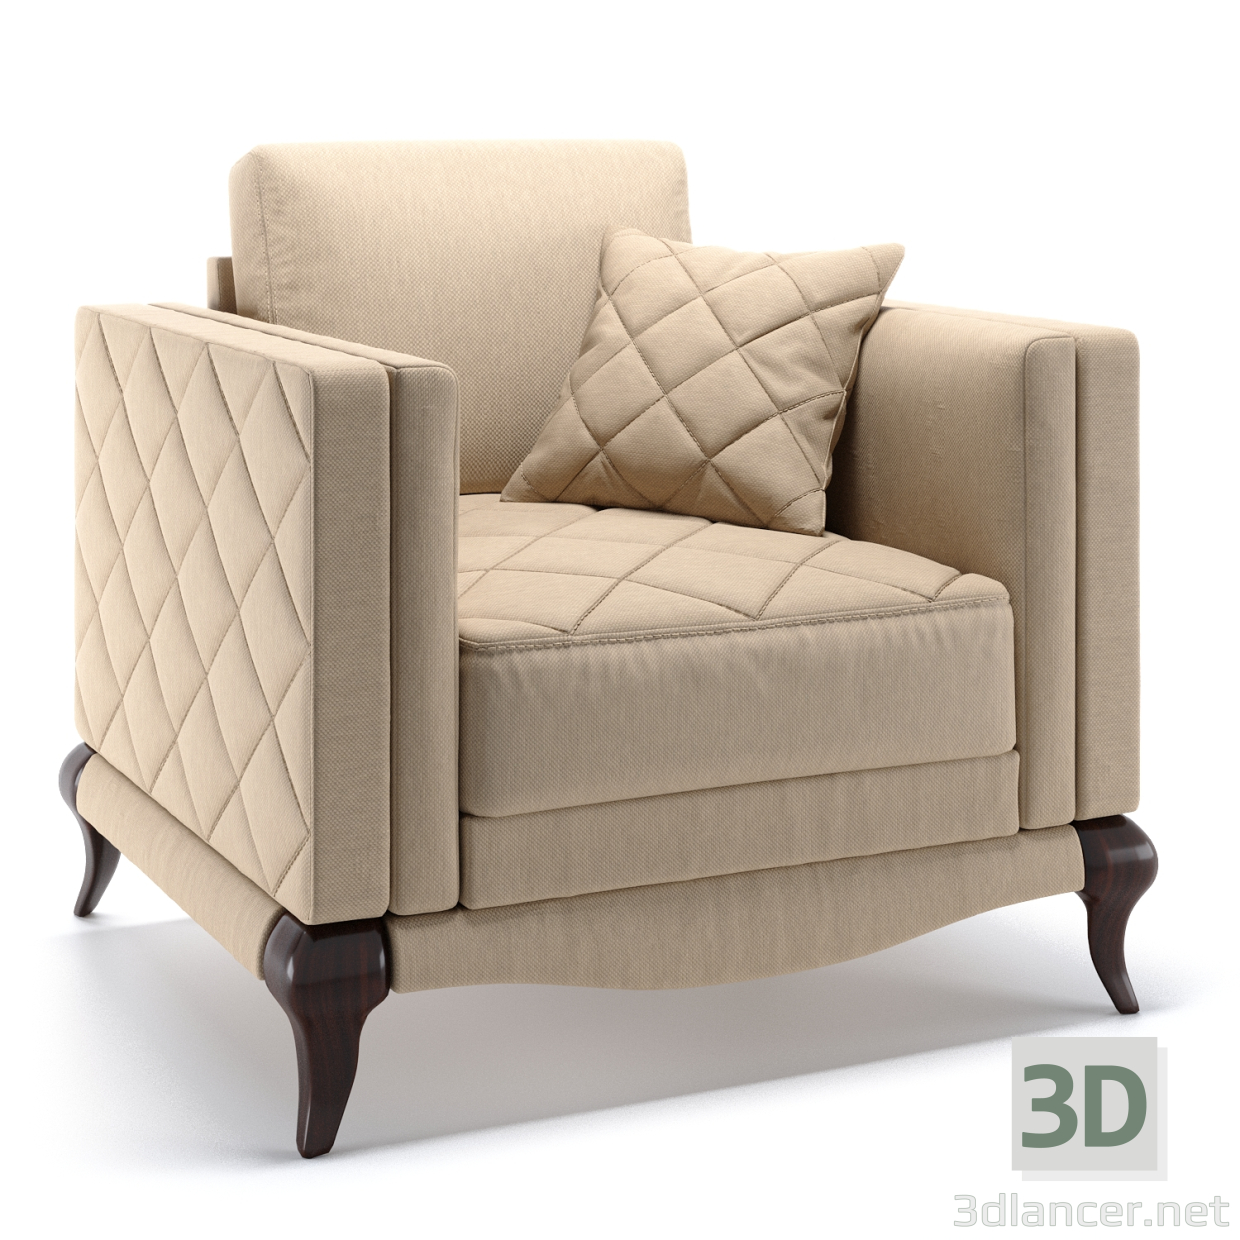 Laviano-Stuhl 3D-Modell kaufen - Rendern